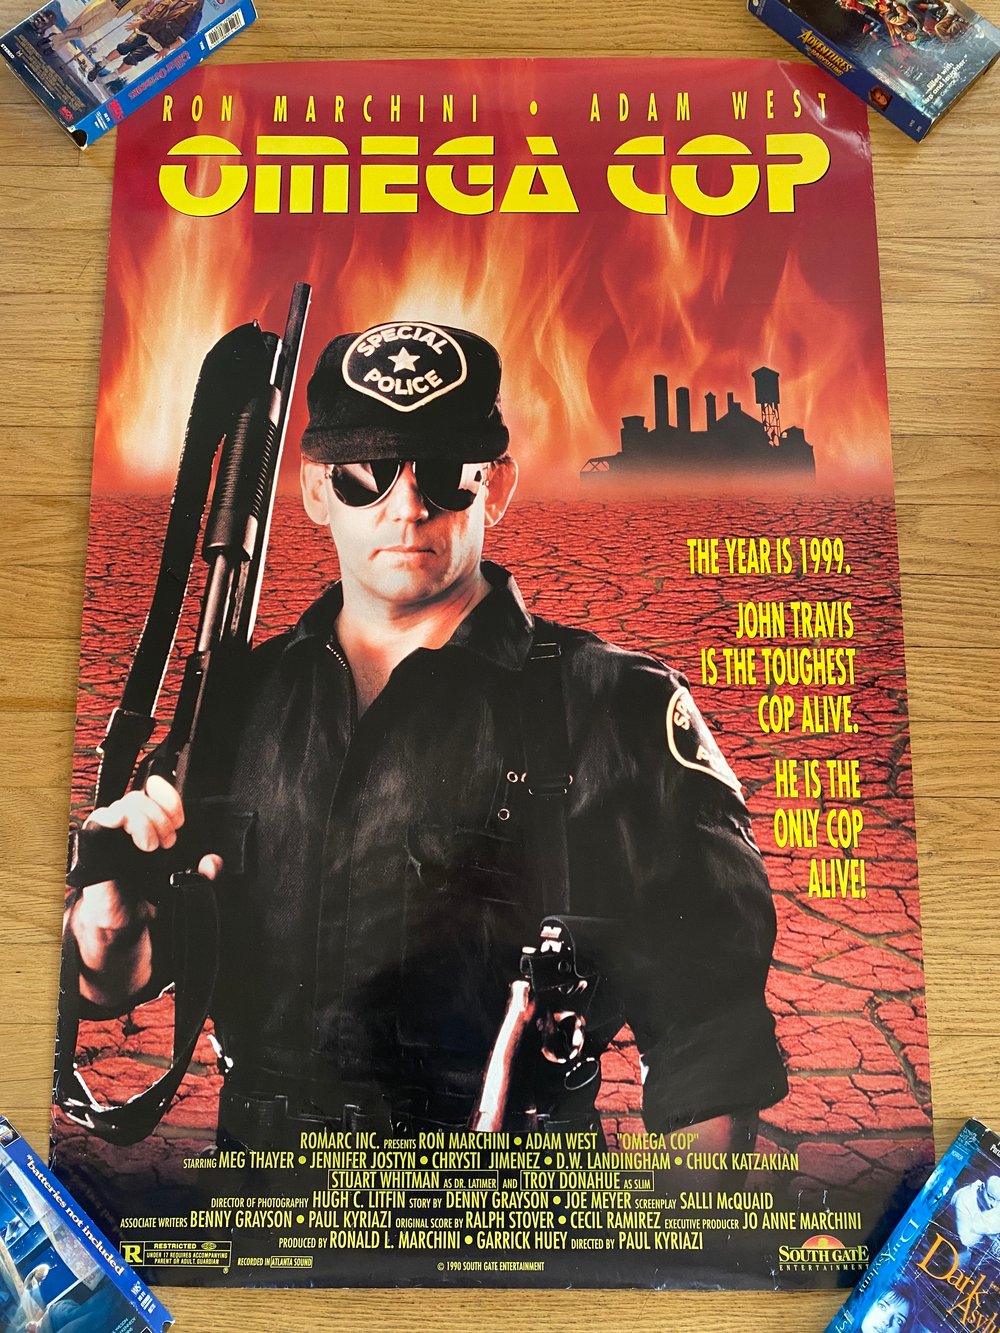 1990 OMEGA COP Original Southgate Entertainment Video Promotional Movie poster